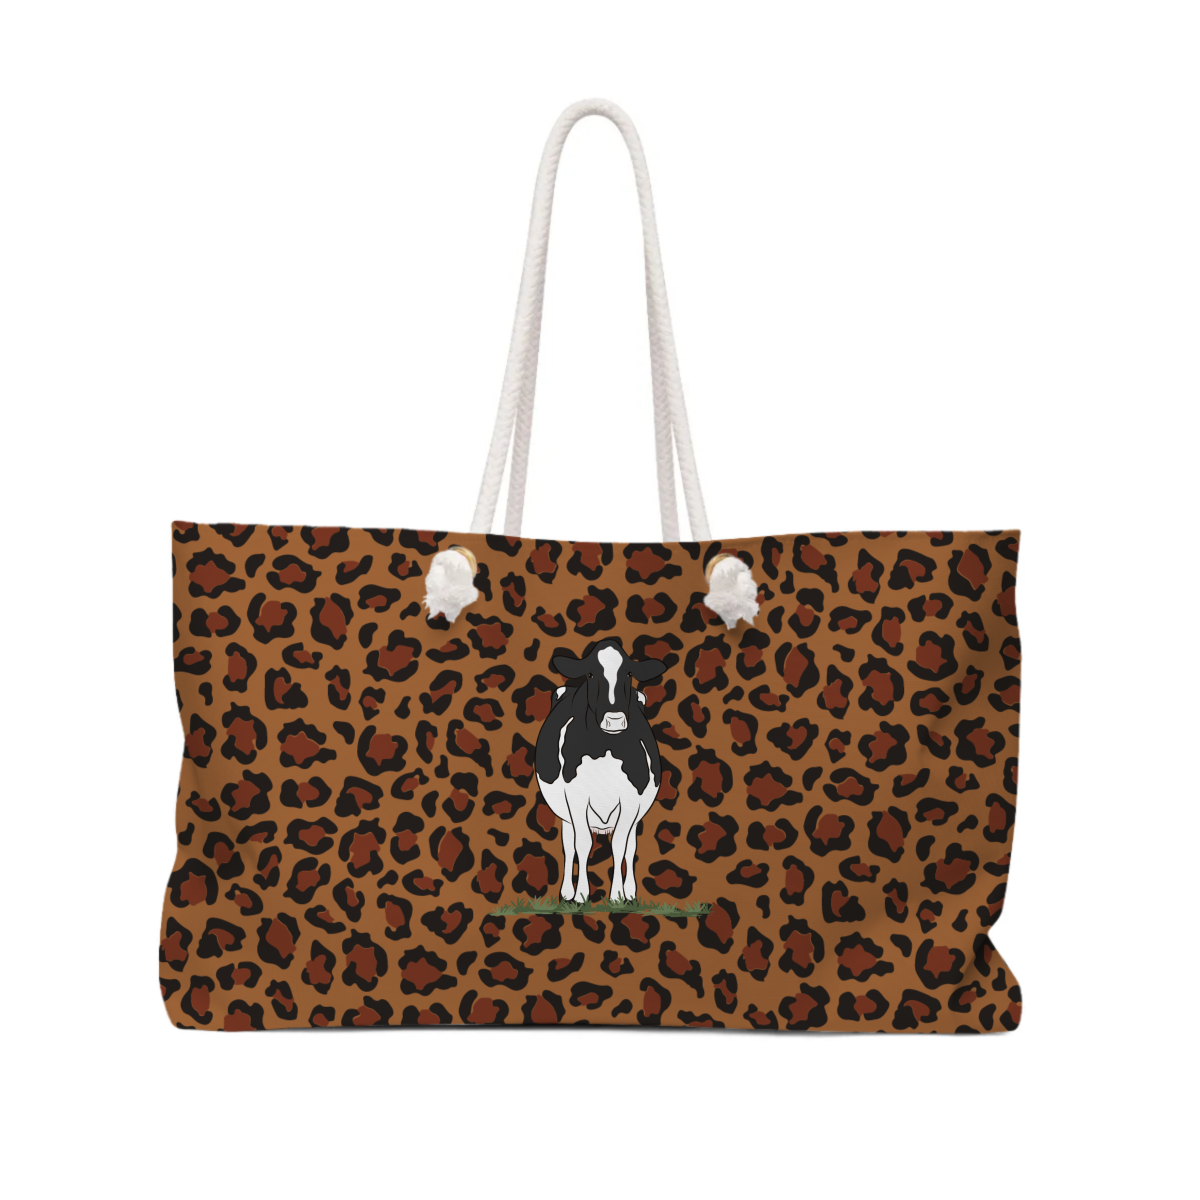 Personalized-Livestock-Tote Bag - Cheetah Pattern